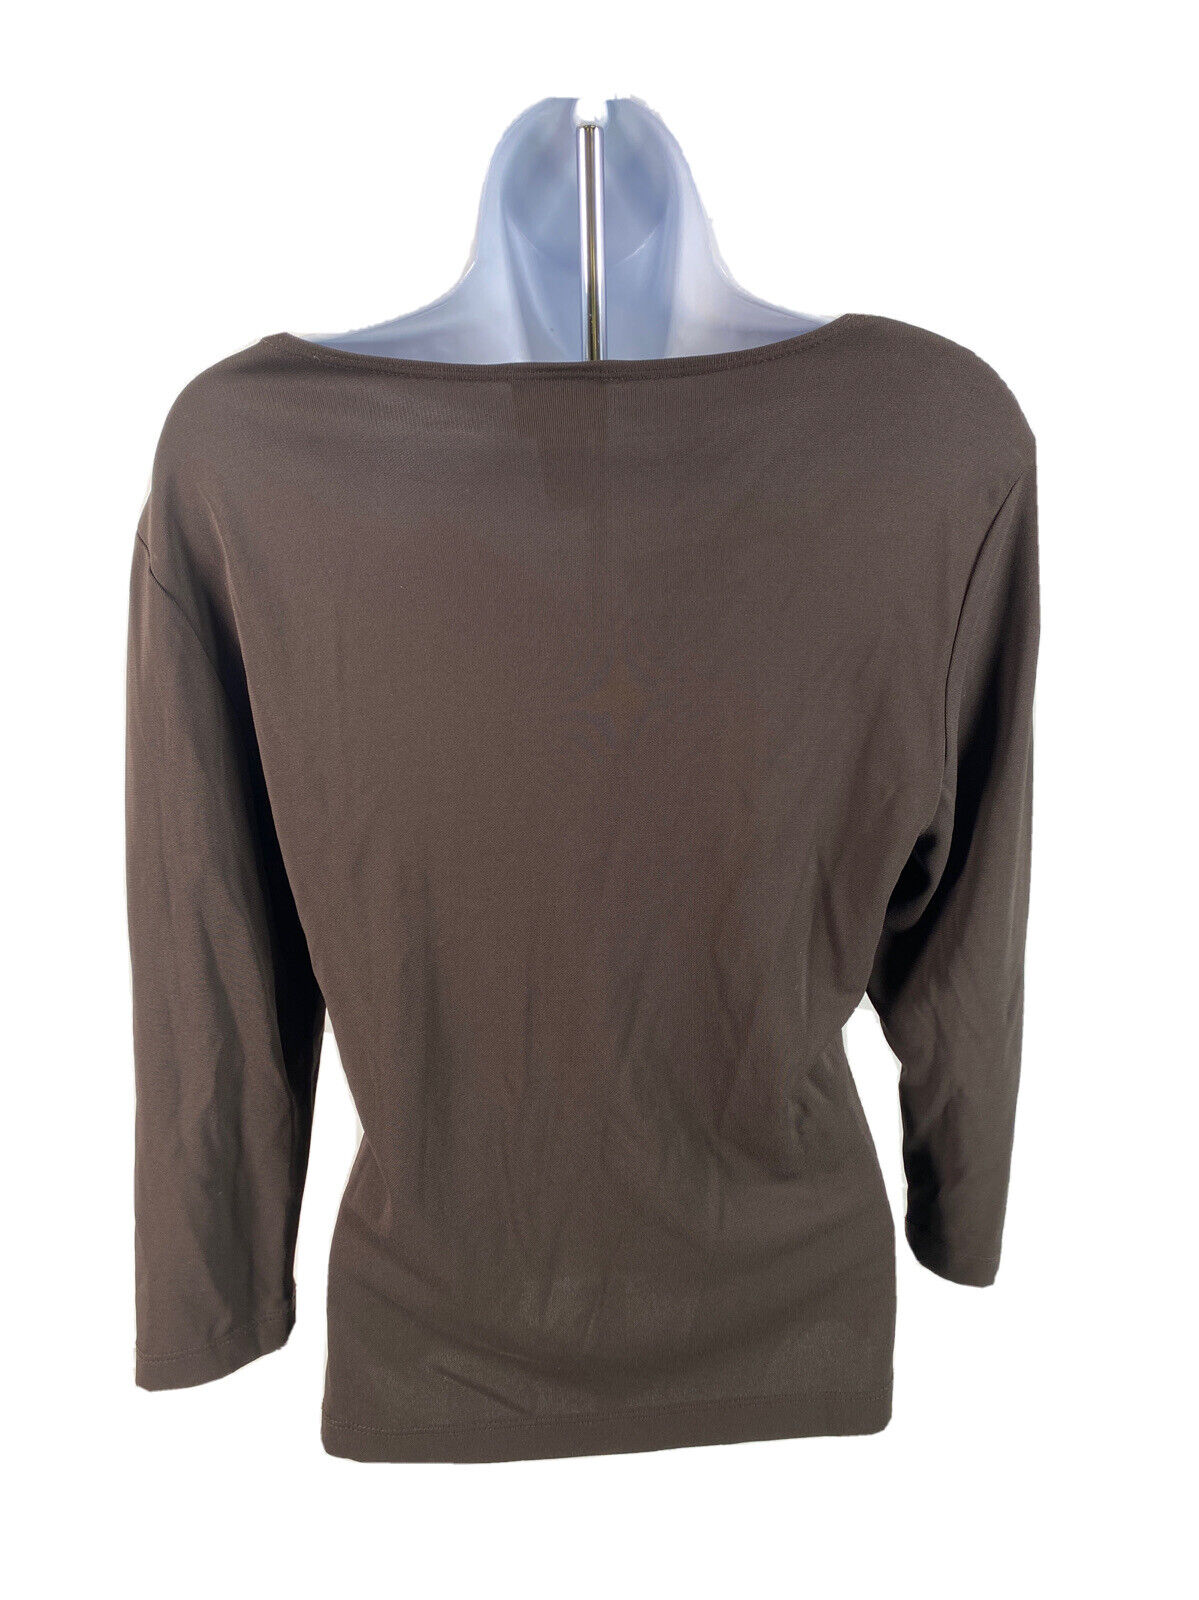 Chico's Women's Brown Sheer V-Neck 3/4 Sleeve Blouse -1/ US M